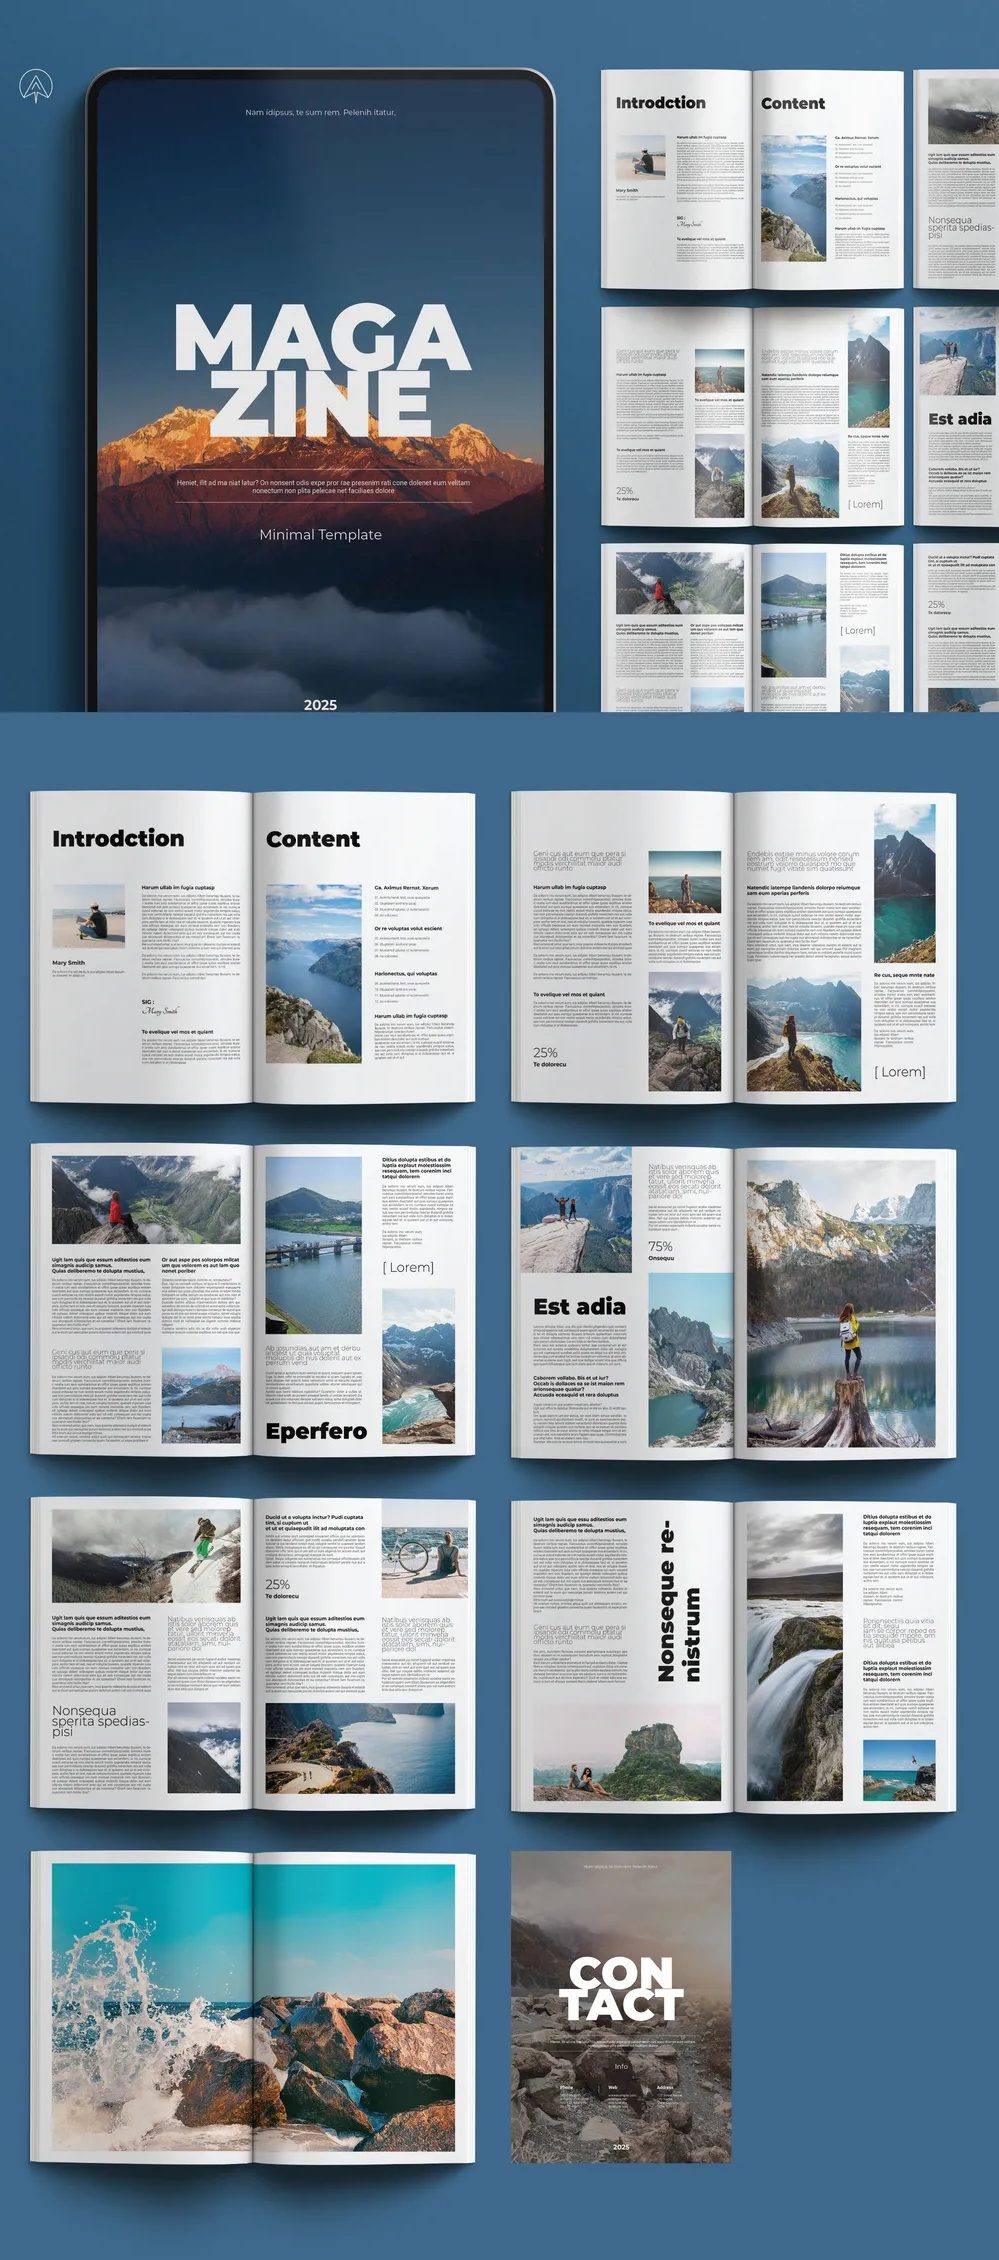 Adobestock - Minimal Magazine Template 715610704